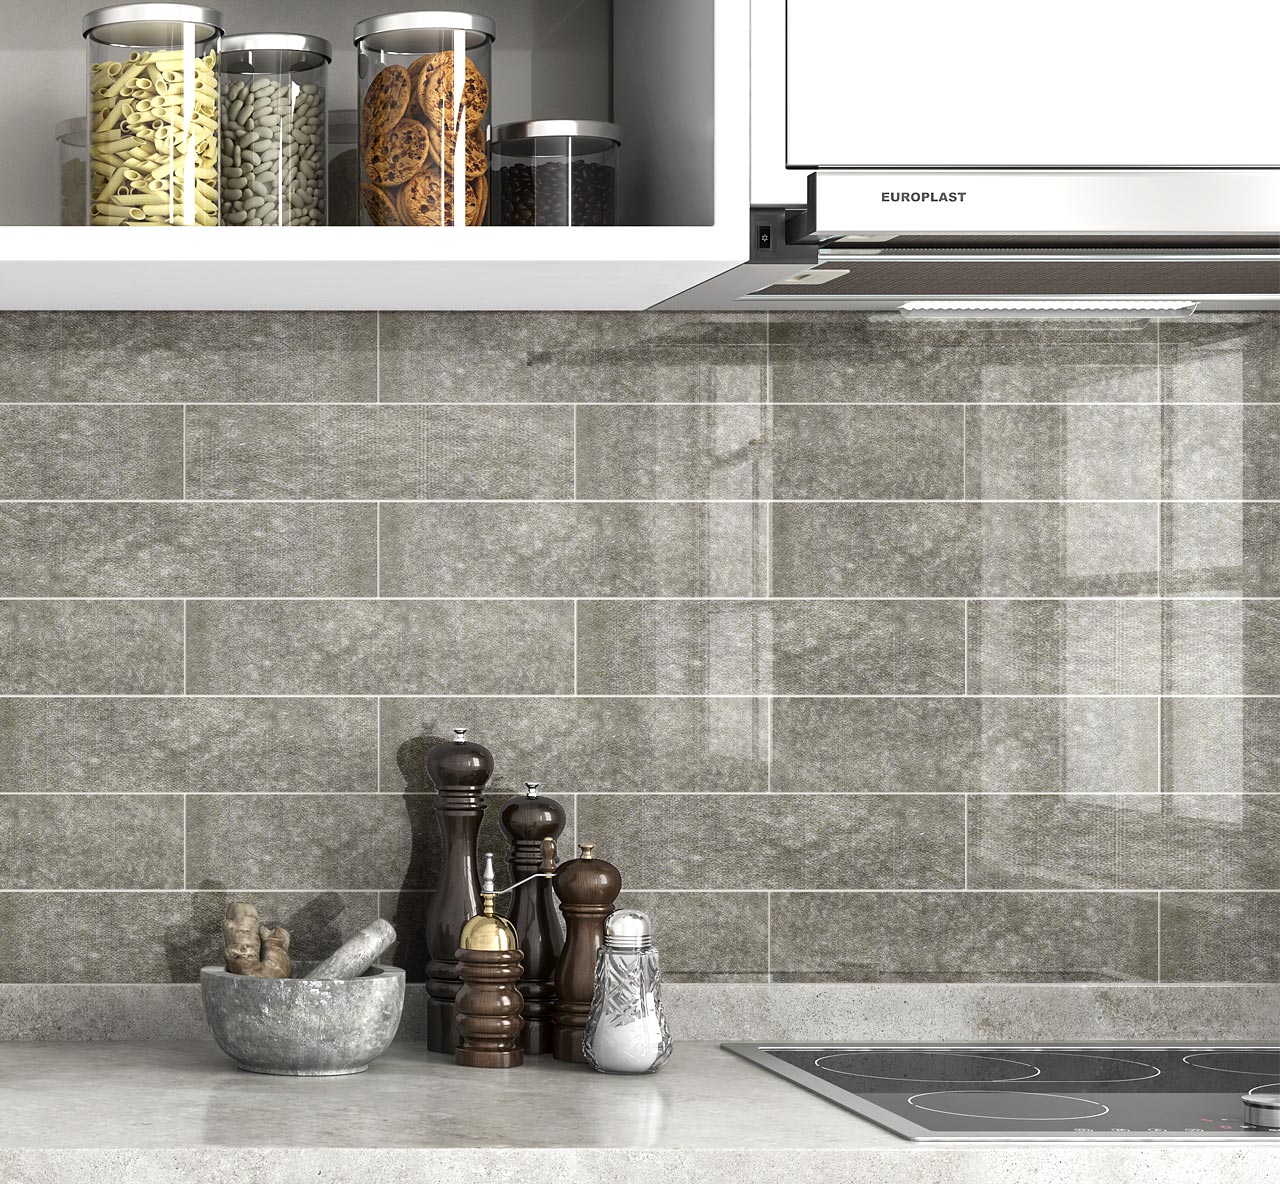 Marakkesh Greige Gloss Metro Tiles used as grey kitchen splashback wall tiles in a traditional kitchen